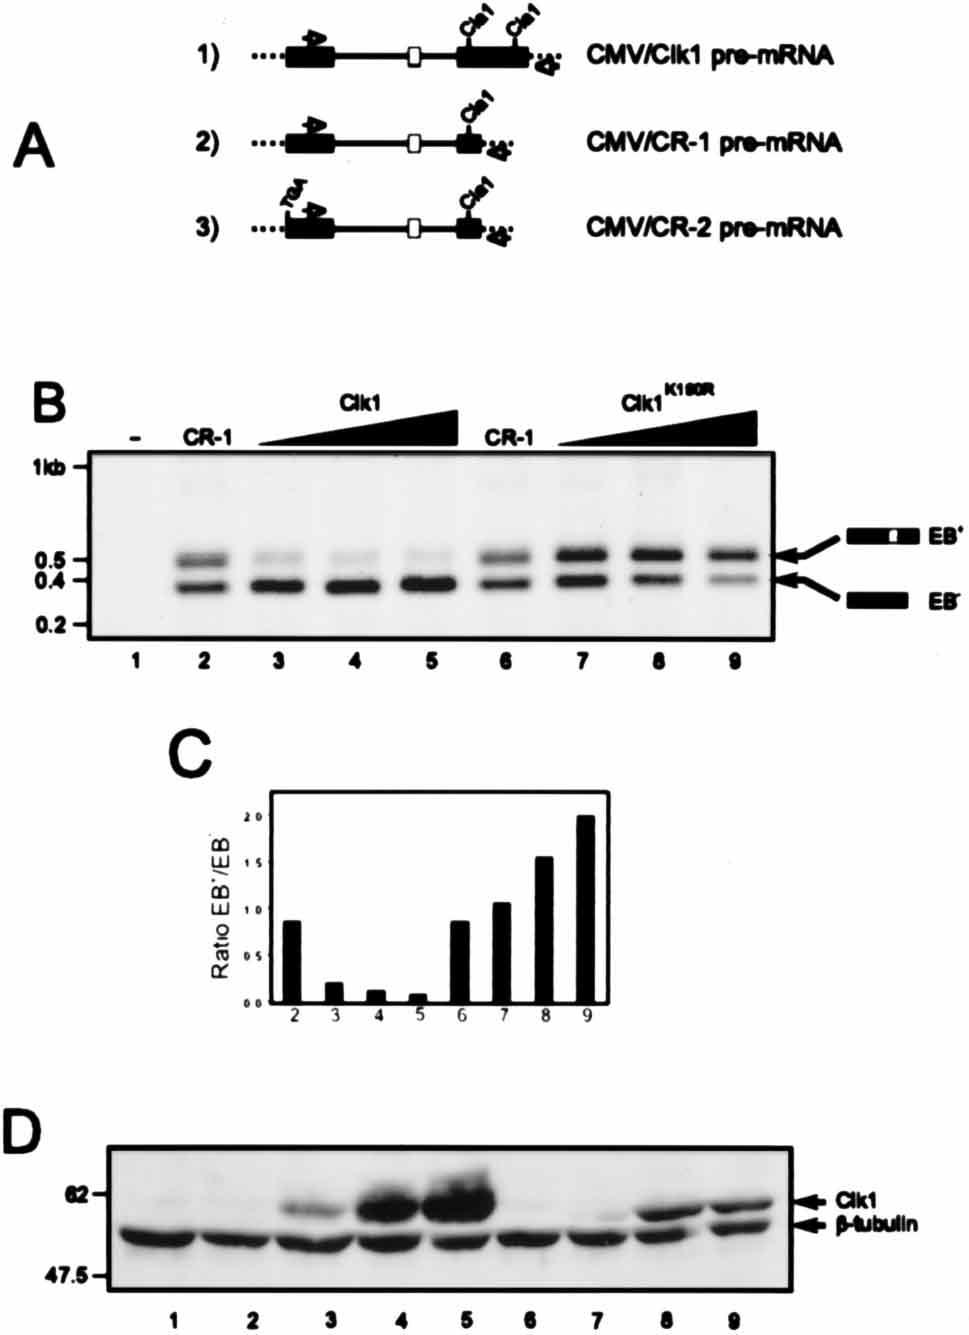 5998 DUNCAN ET AL. MOL. CELL. BIOL. FIG. 2. Catalytically active Clk1 promotes exon skipping of Clk1 pre-mrna in vivo. (A) Schematic representation of Clk1 minigenes.